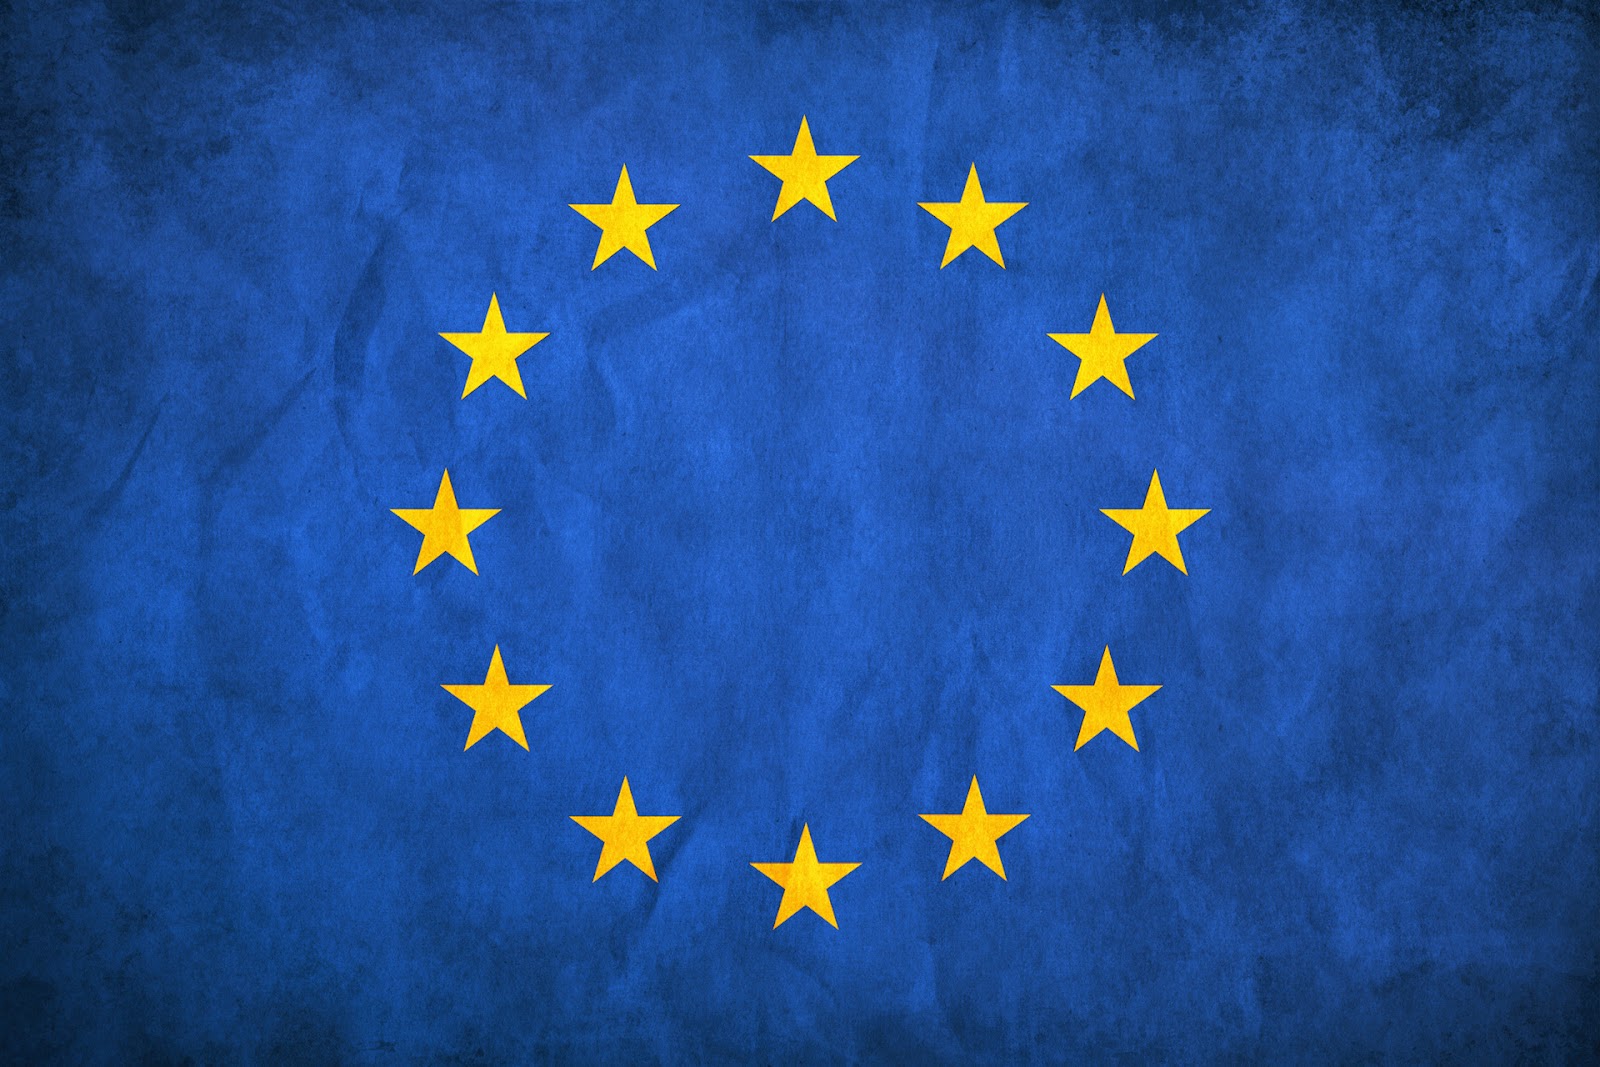 união europeia